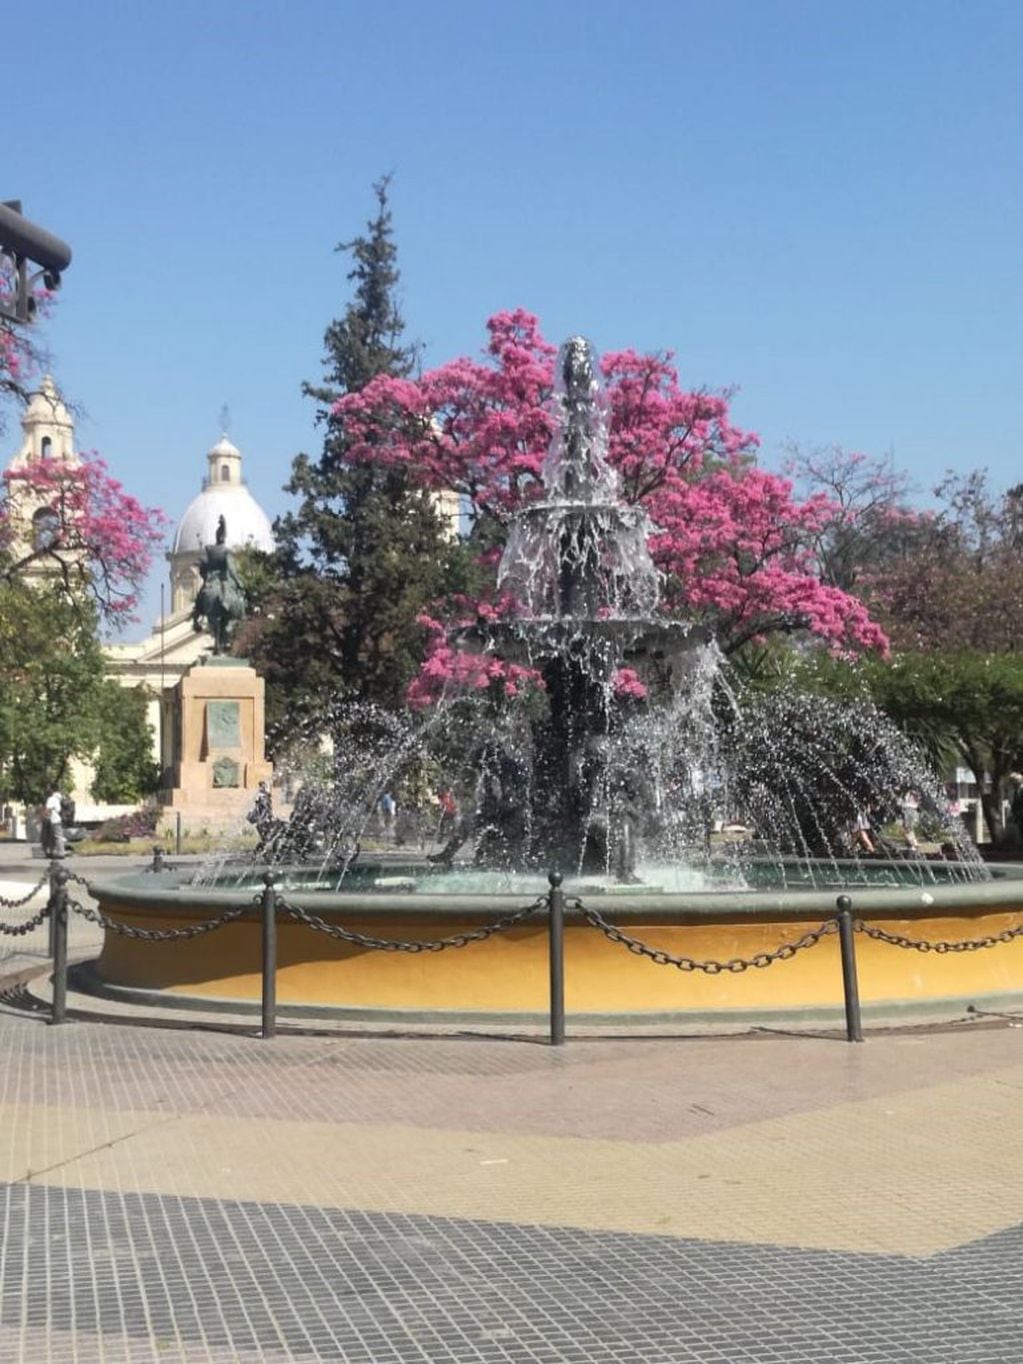 Plaza Libertad en la actualidad.